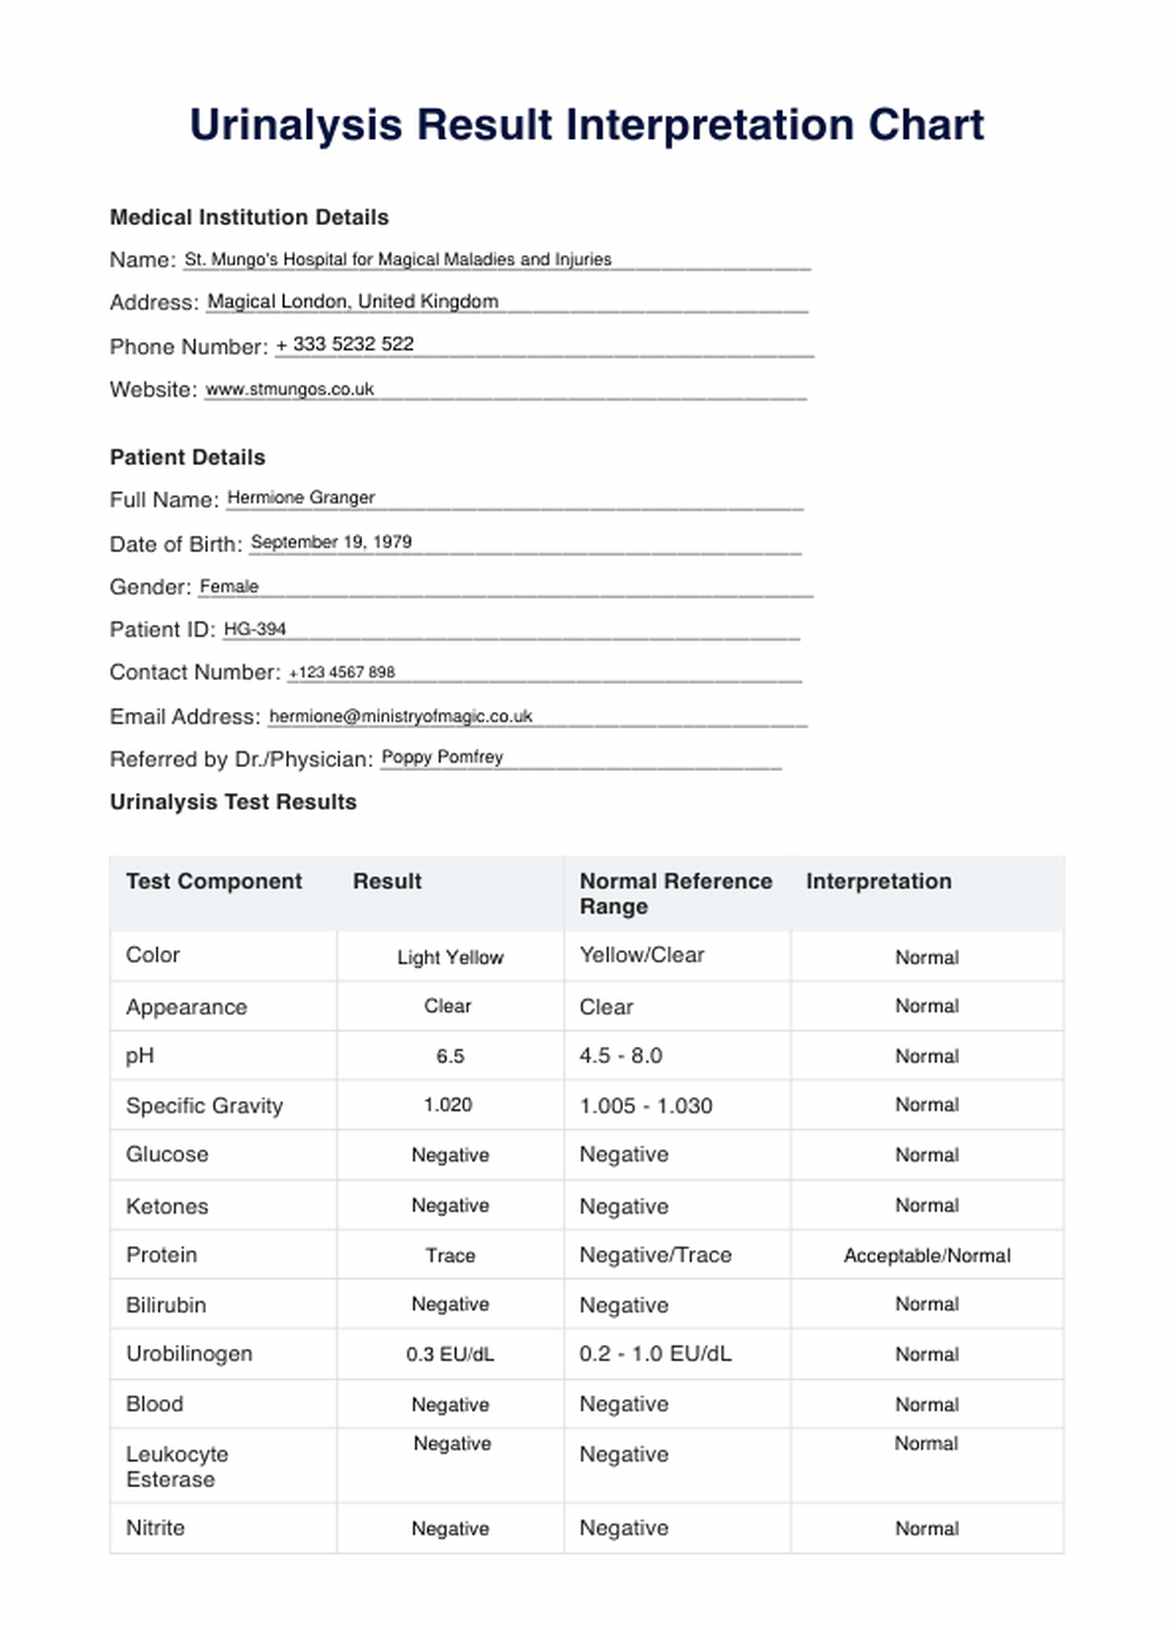 Urinalysis Result Interpretation PDF Example